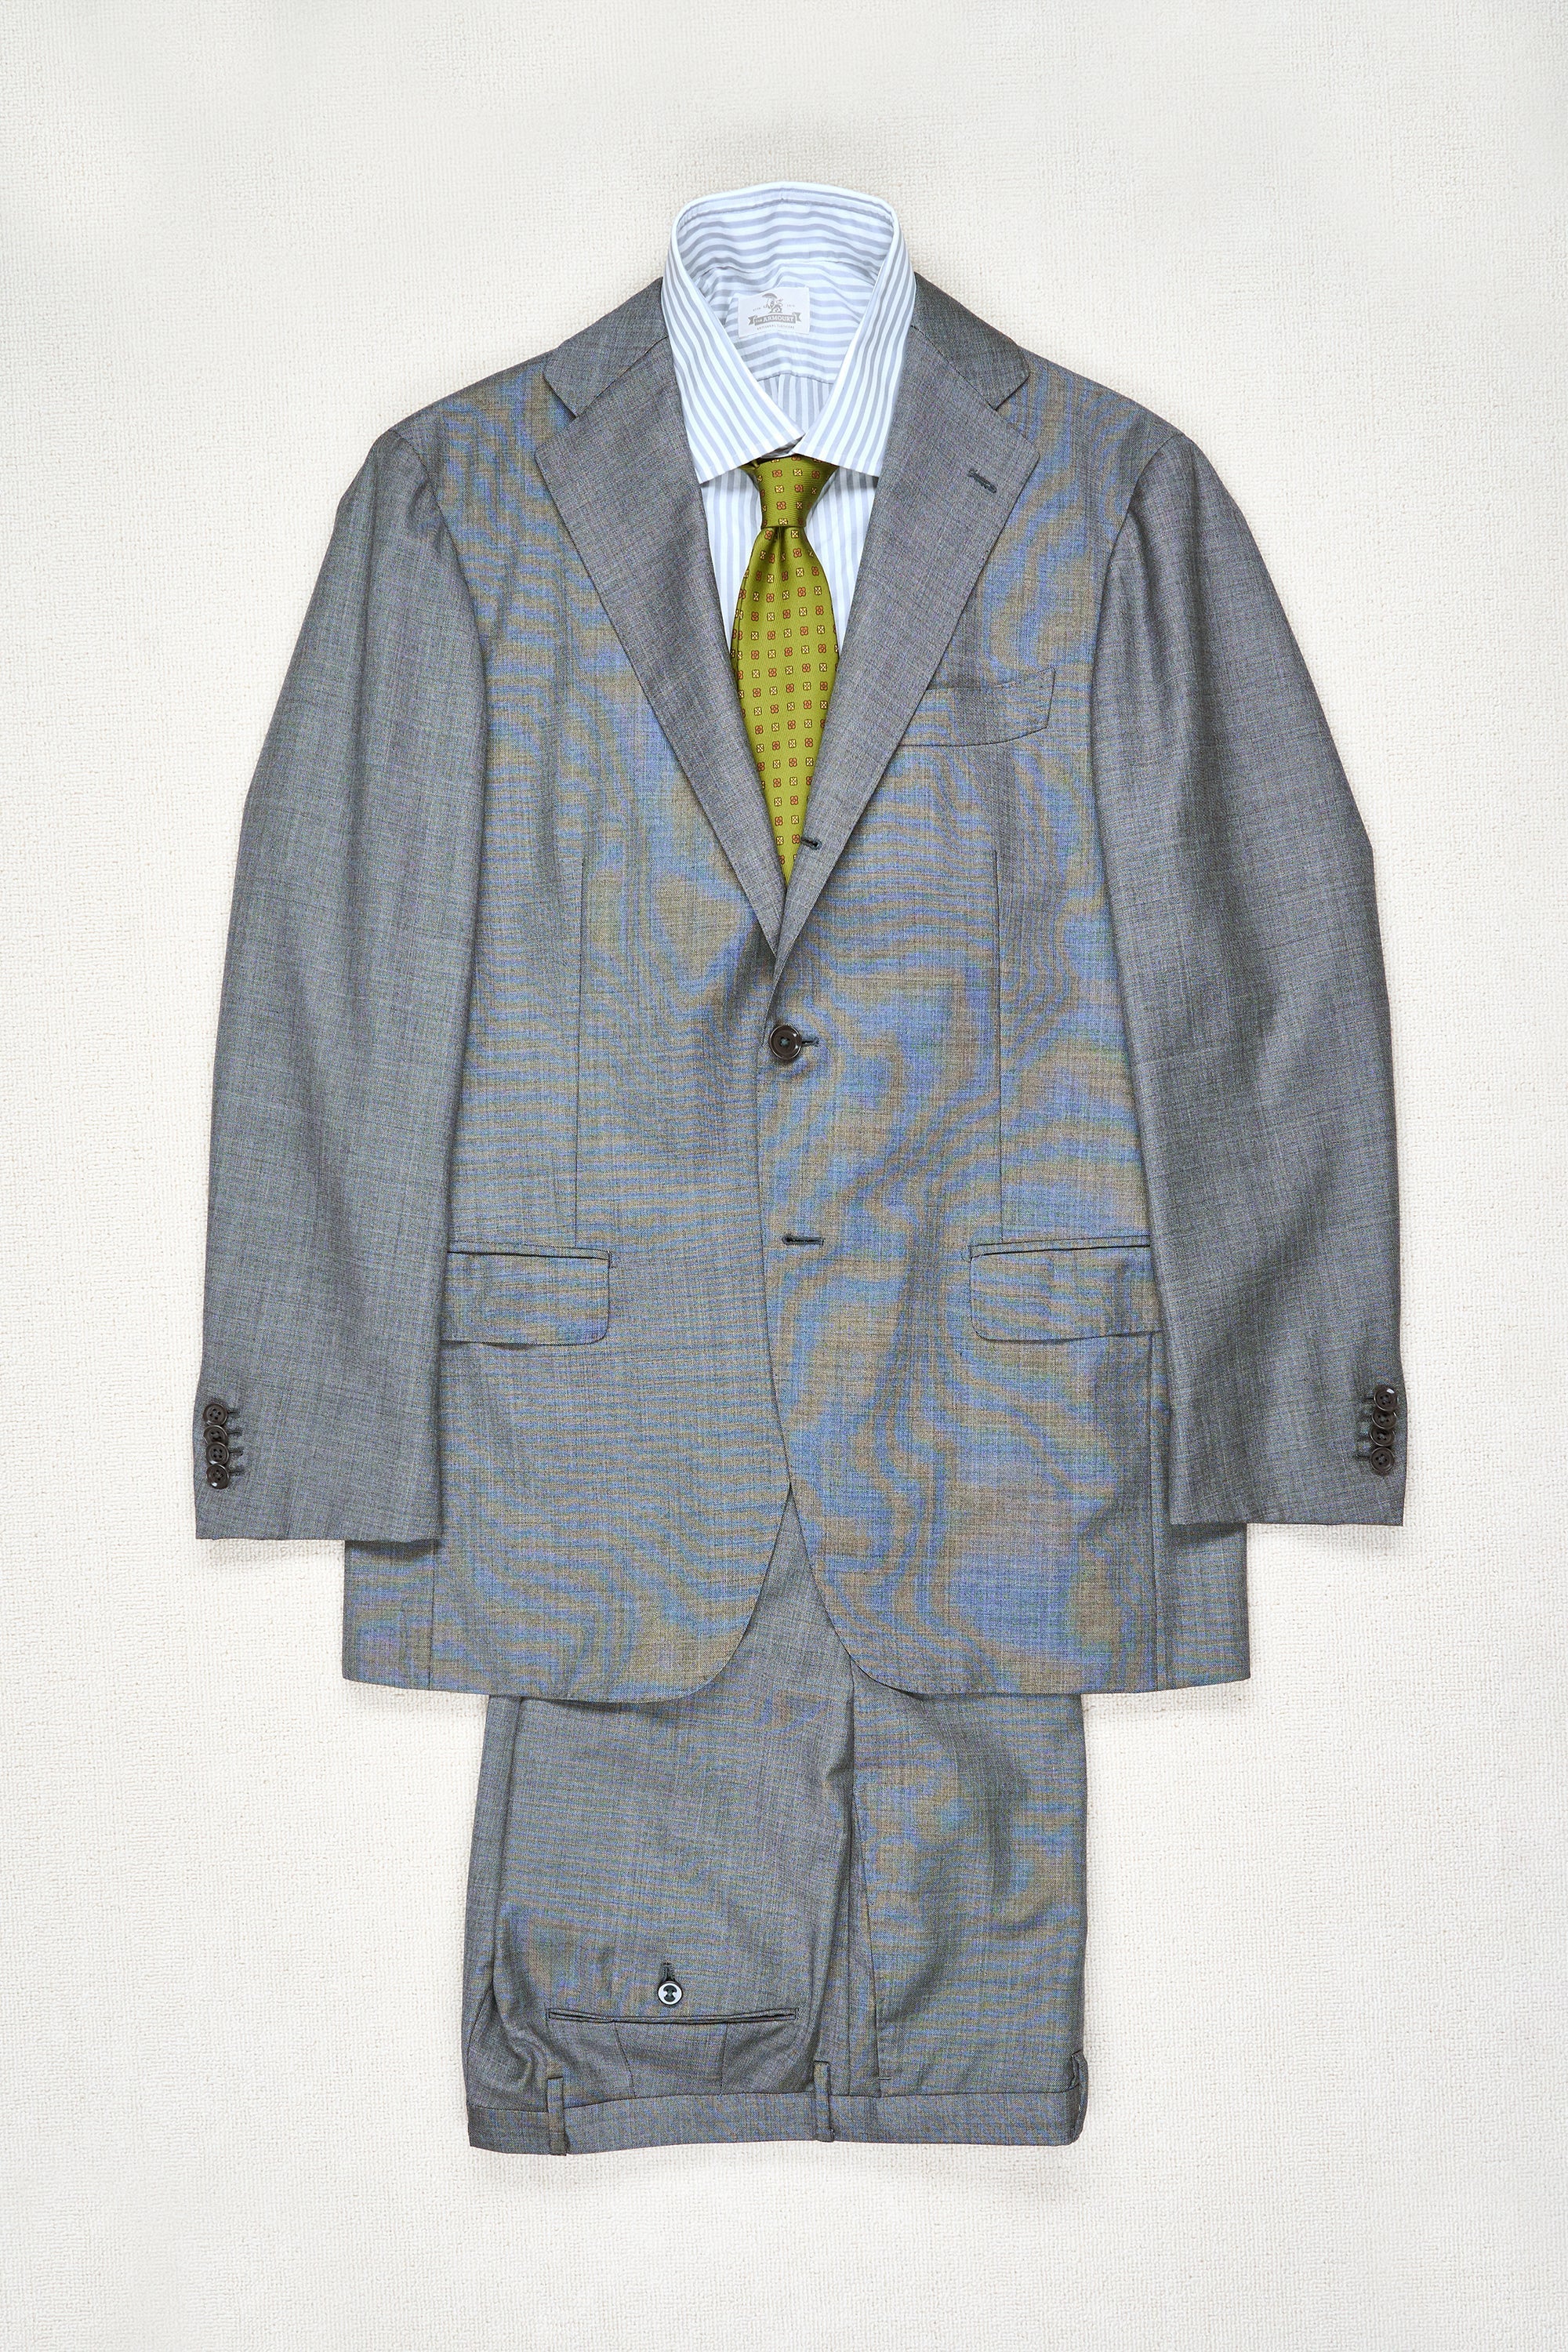 Ring Jacket 184 Grey Shark Skin Wool Suit